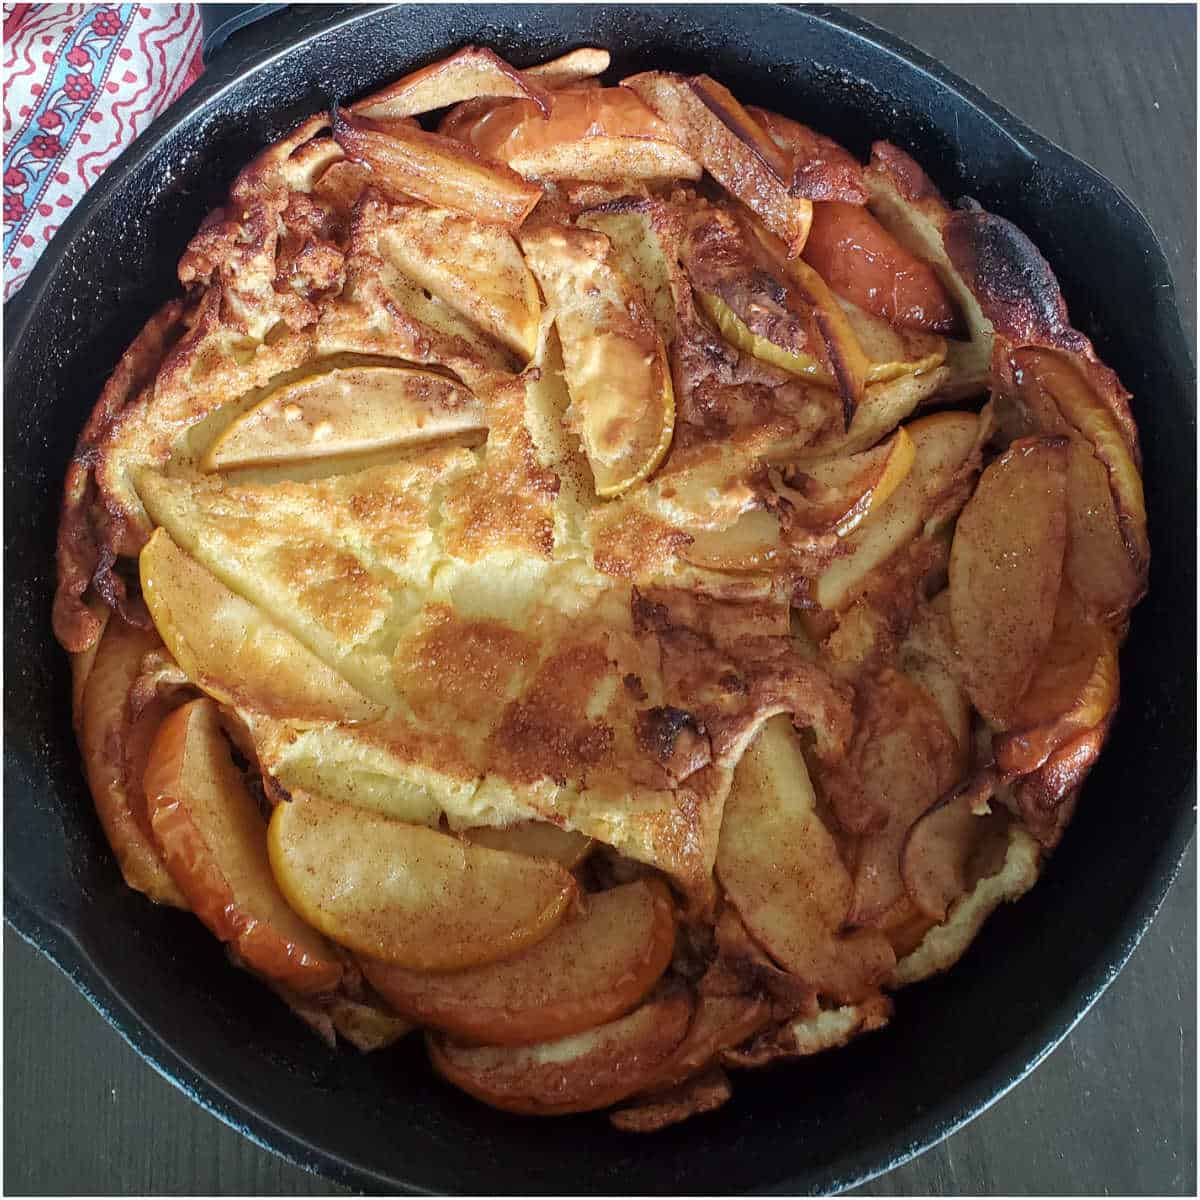 Big Apple Pancake for Two - Recipe Girl